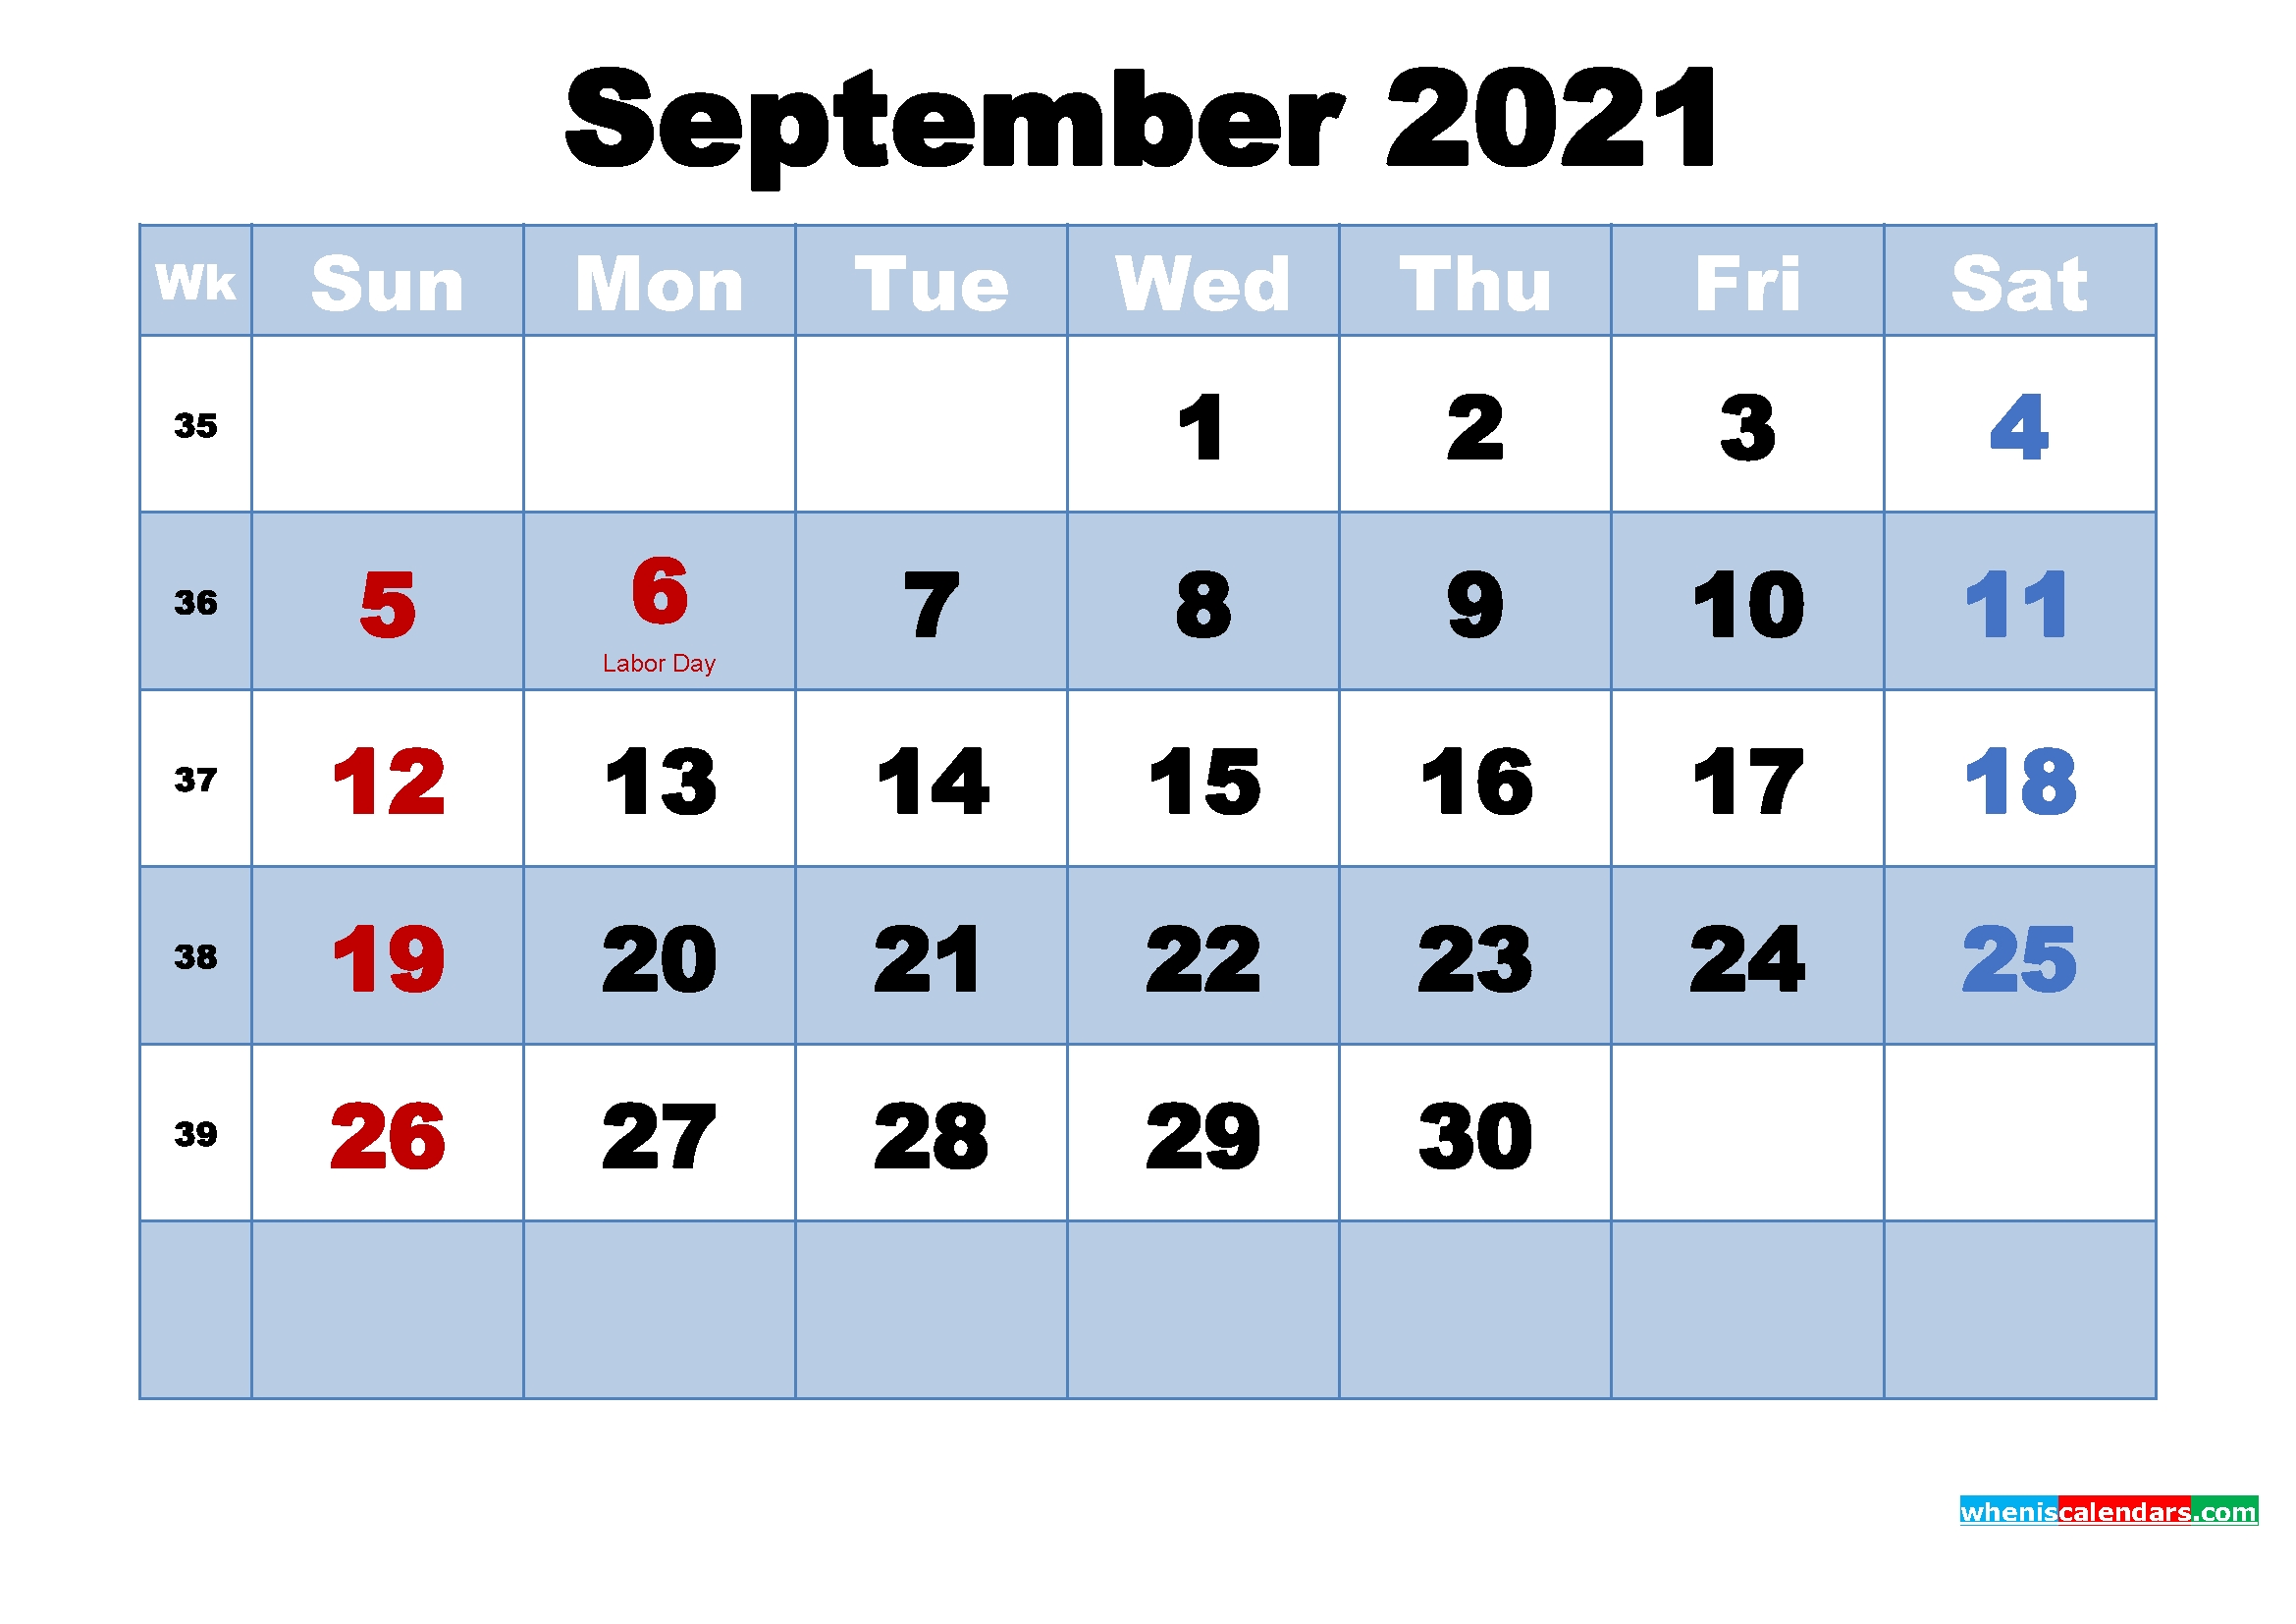 September 2021 Desktop Calendar Monthly - Free 2020 And 2021 Calendar Printable Monthly And Yearly 2021 Calendar September Month